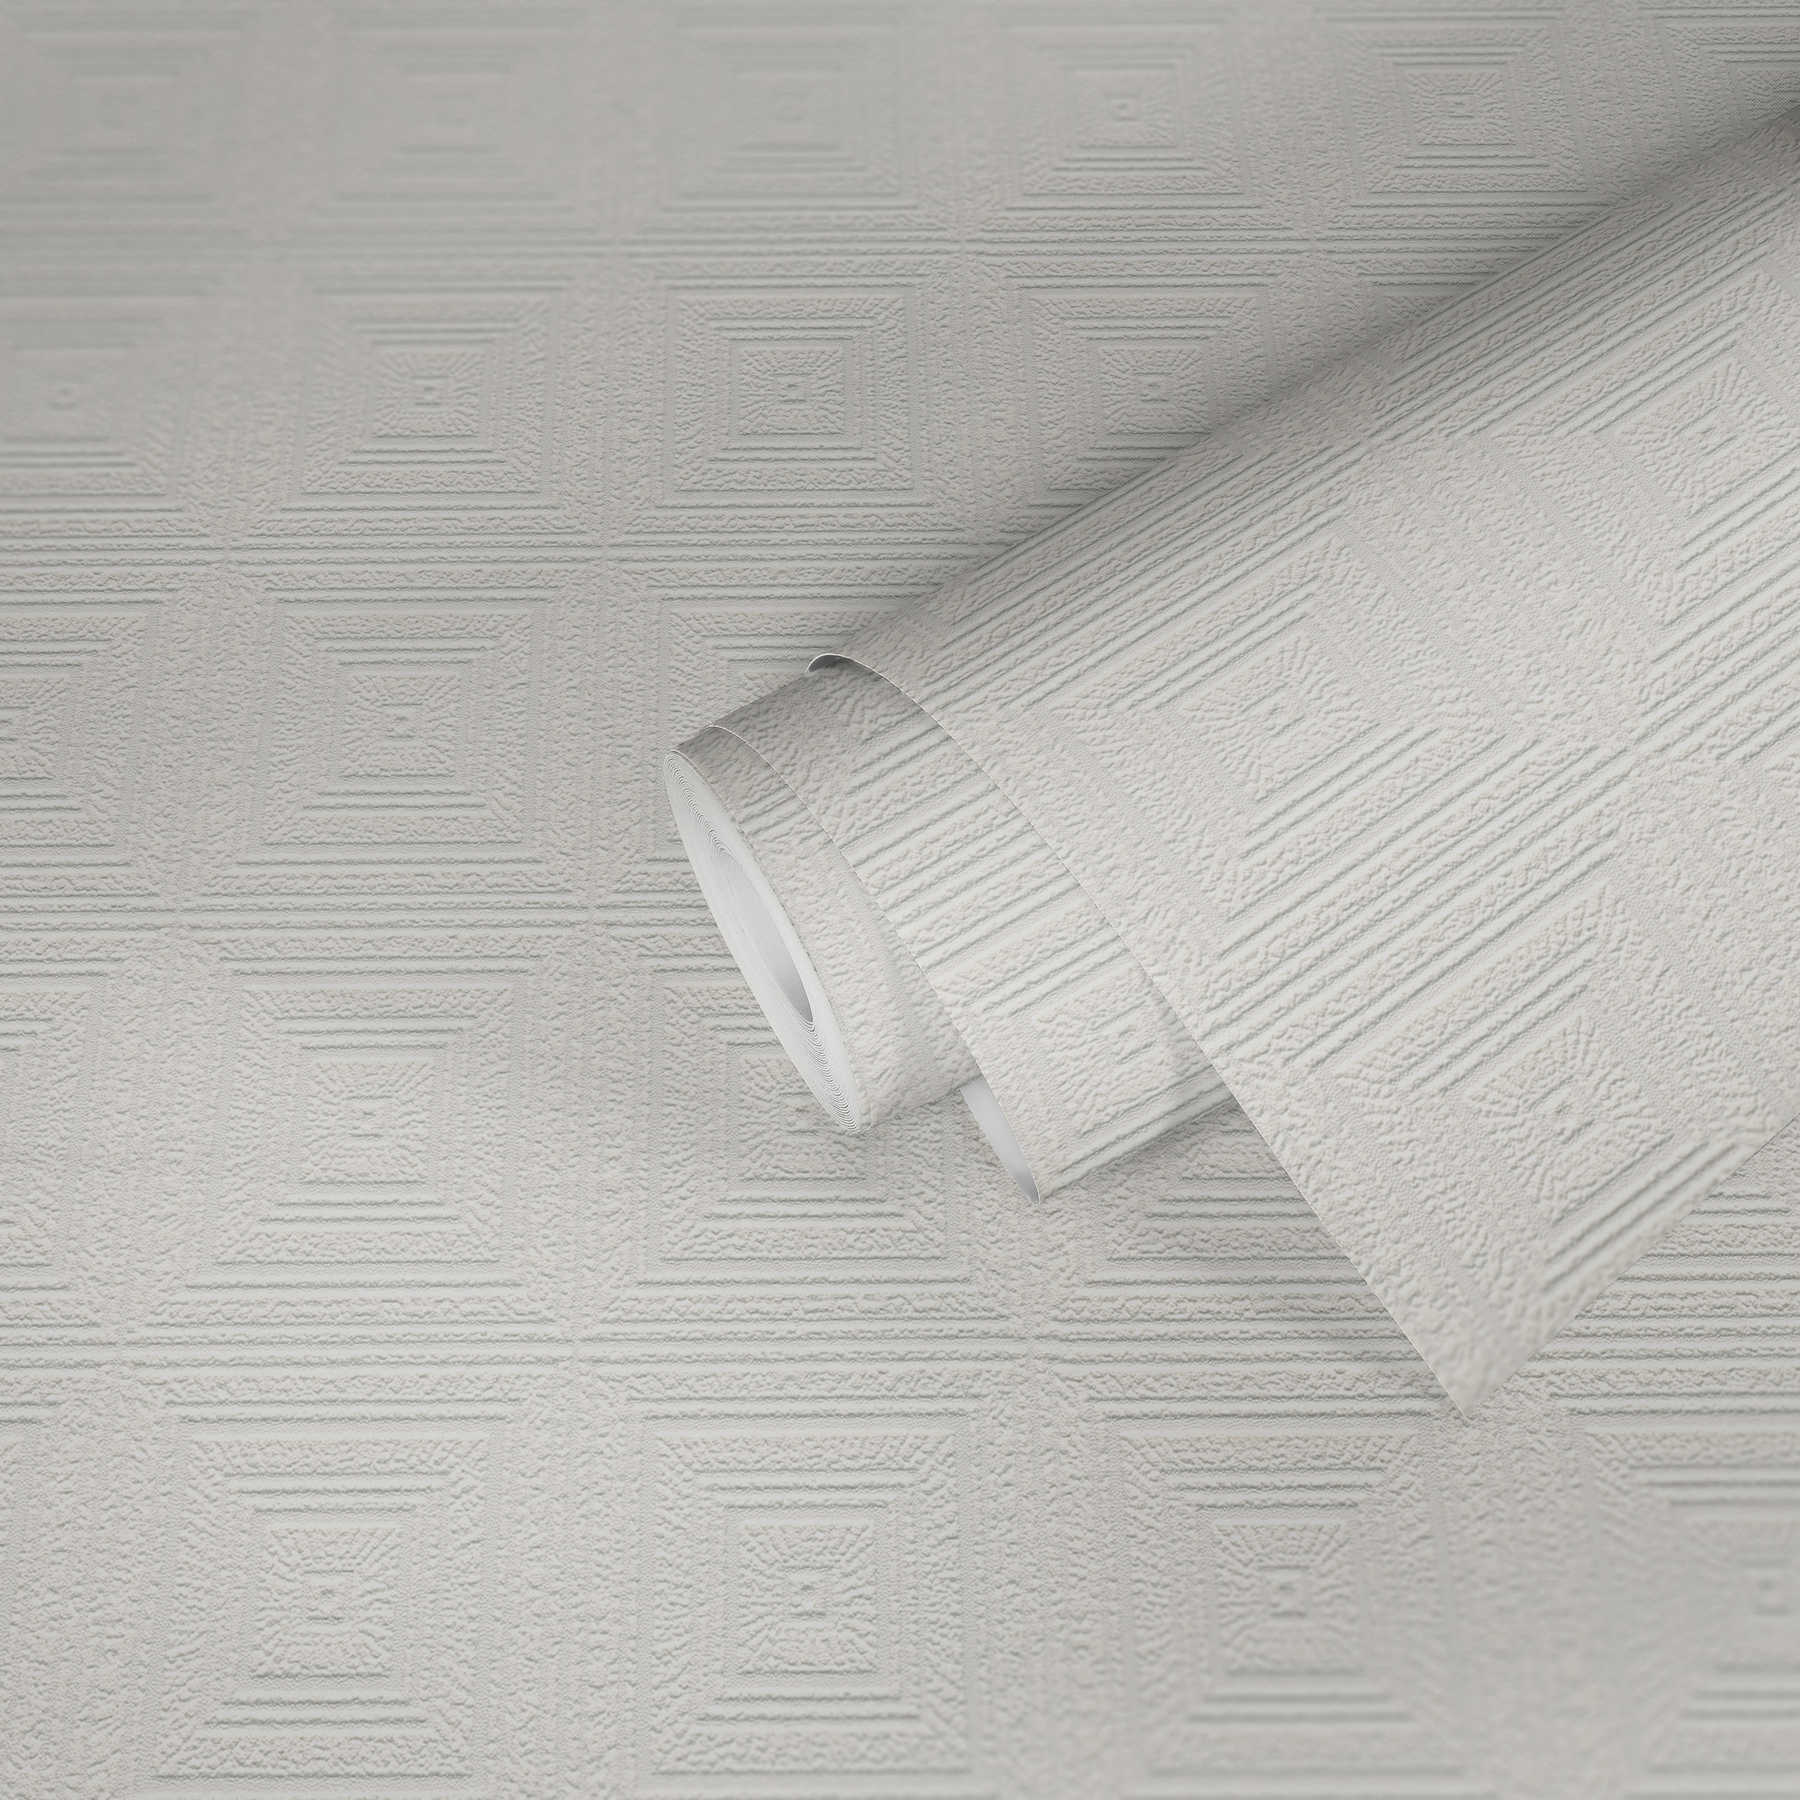             Papiertapete Dekor-Kassetten Struktureffekt & Putzoptik – Weiß
        